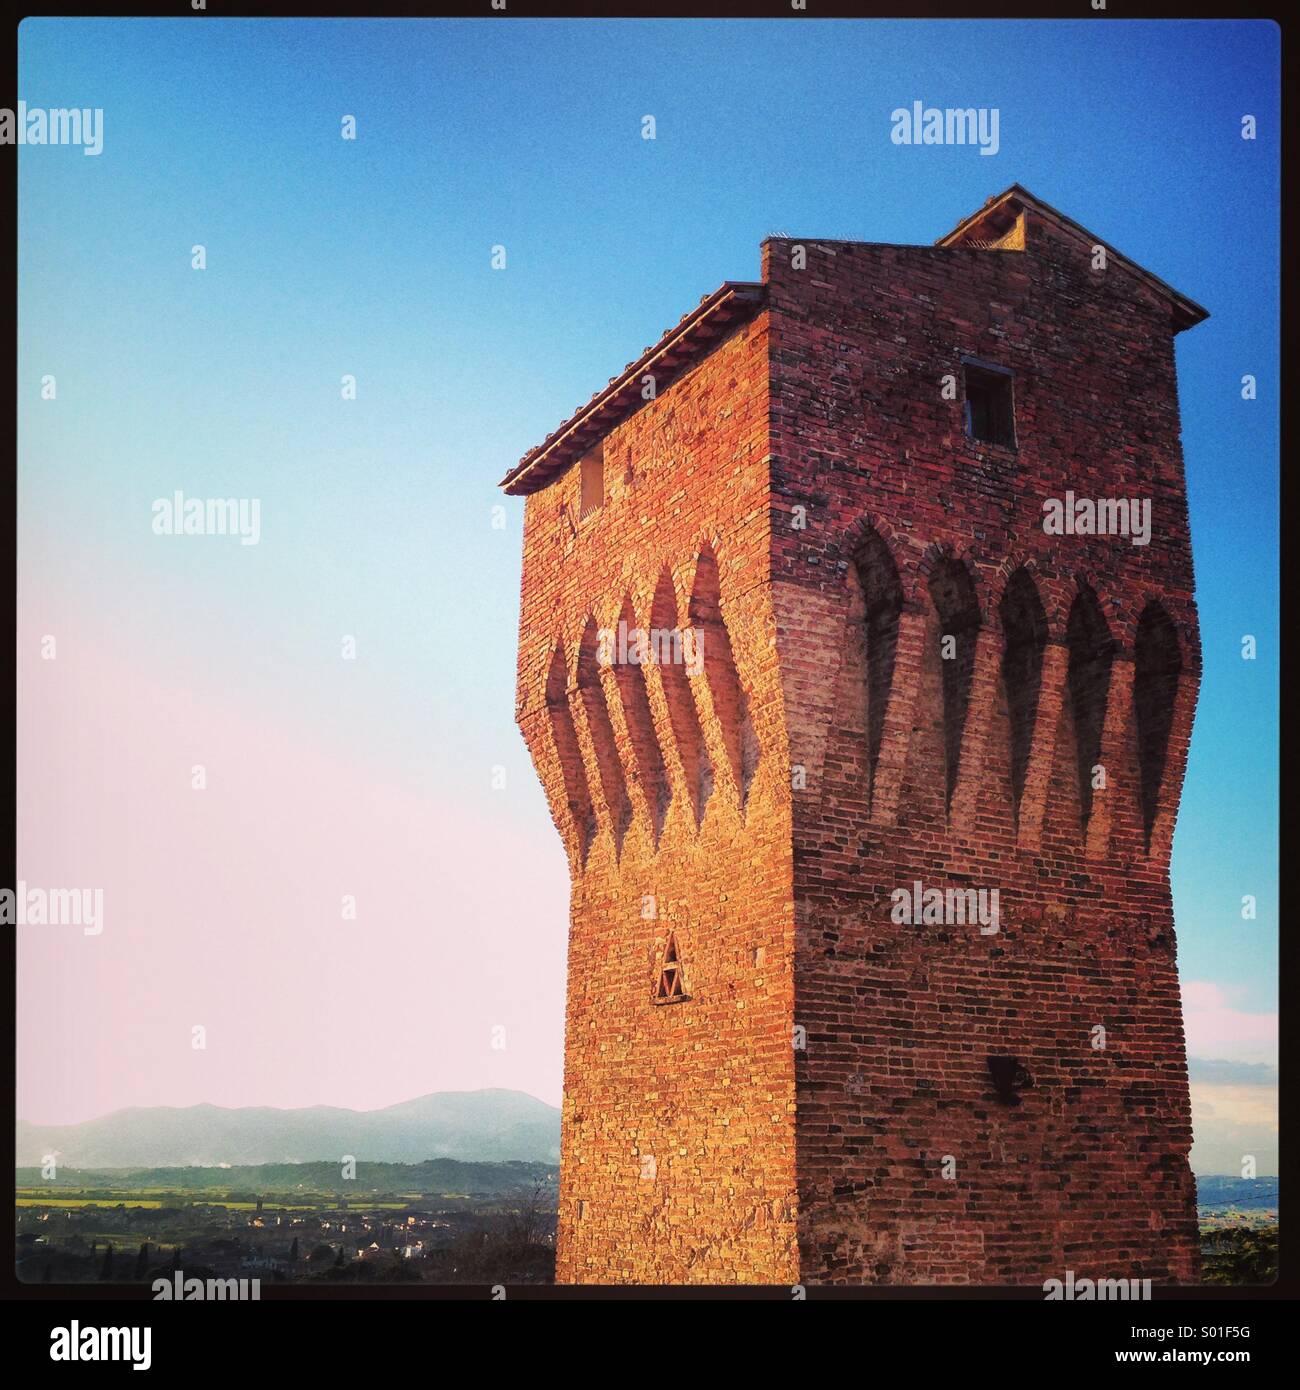 Tower of San Matteo in Montopoli Valdarno - tuscany italy Stock Photo